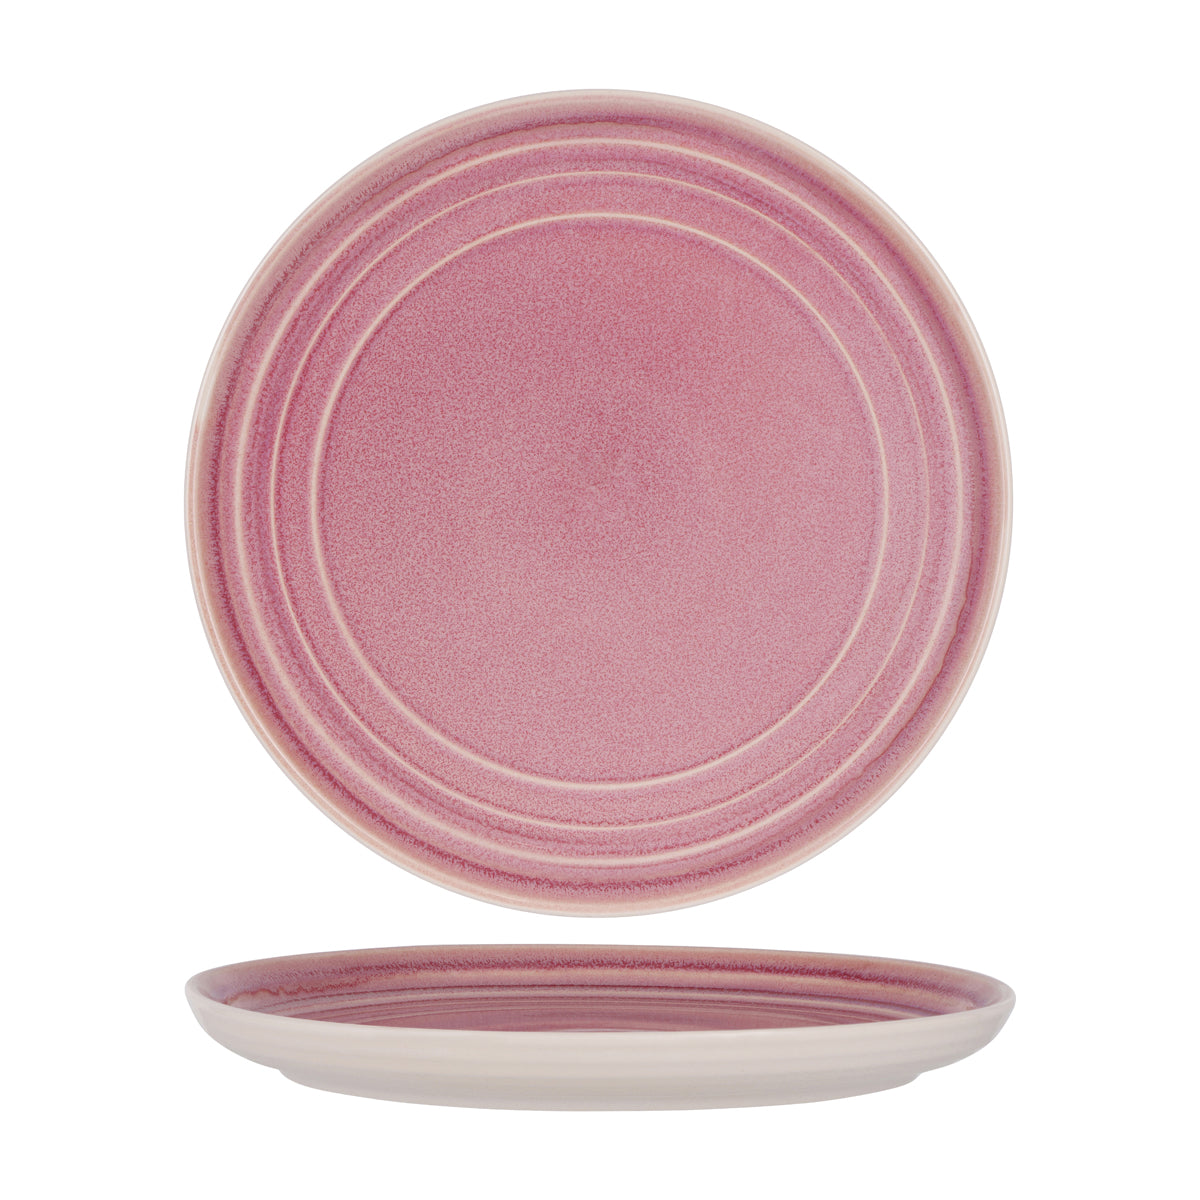 907442 Tablekraft Urban Linea Dusty Pink Round Coupe Plate 275mm Tomkin Australia Hospitality Supplies